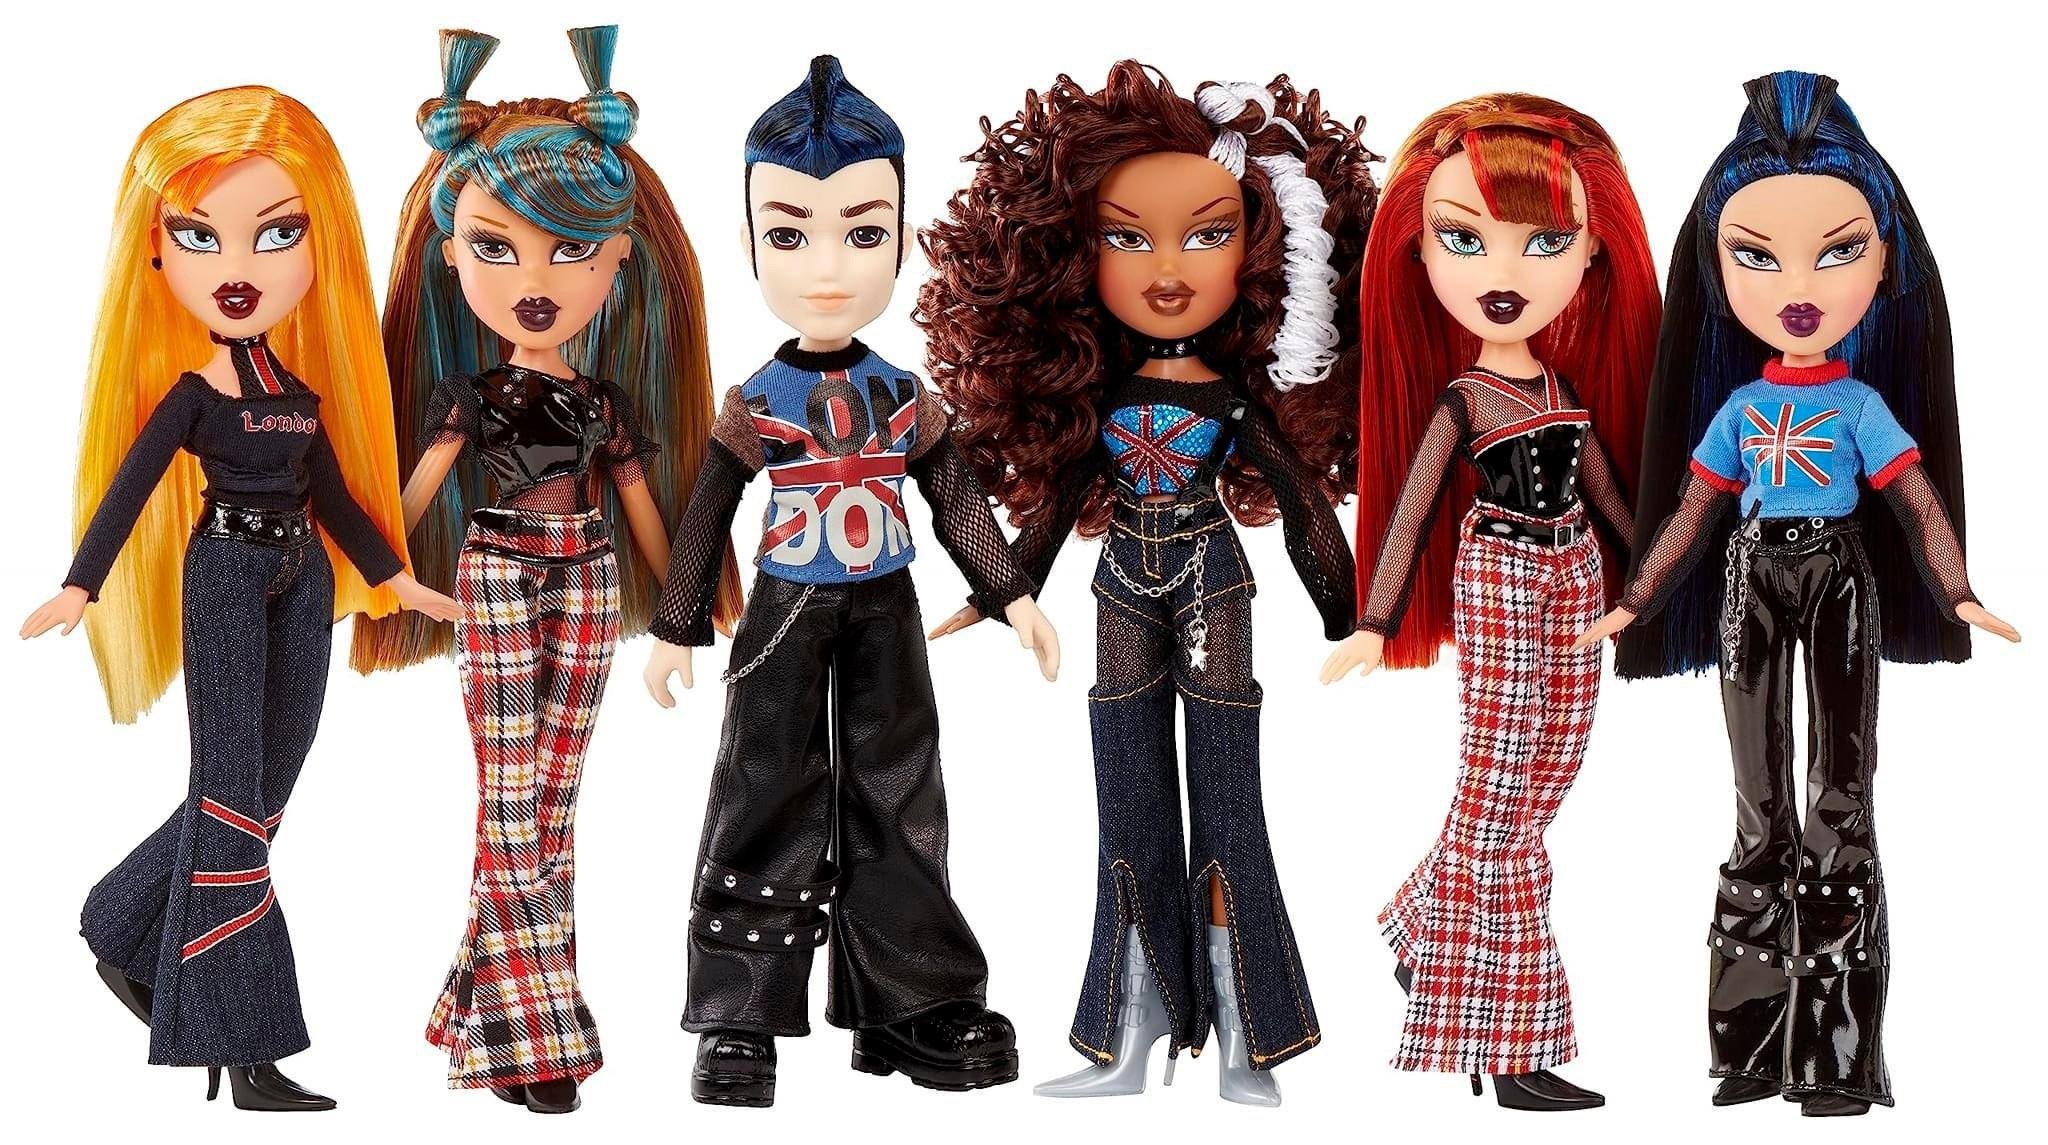 New Bratz 2021 original dolls: Cloe, Sasha, Jade, Yasmin and